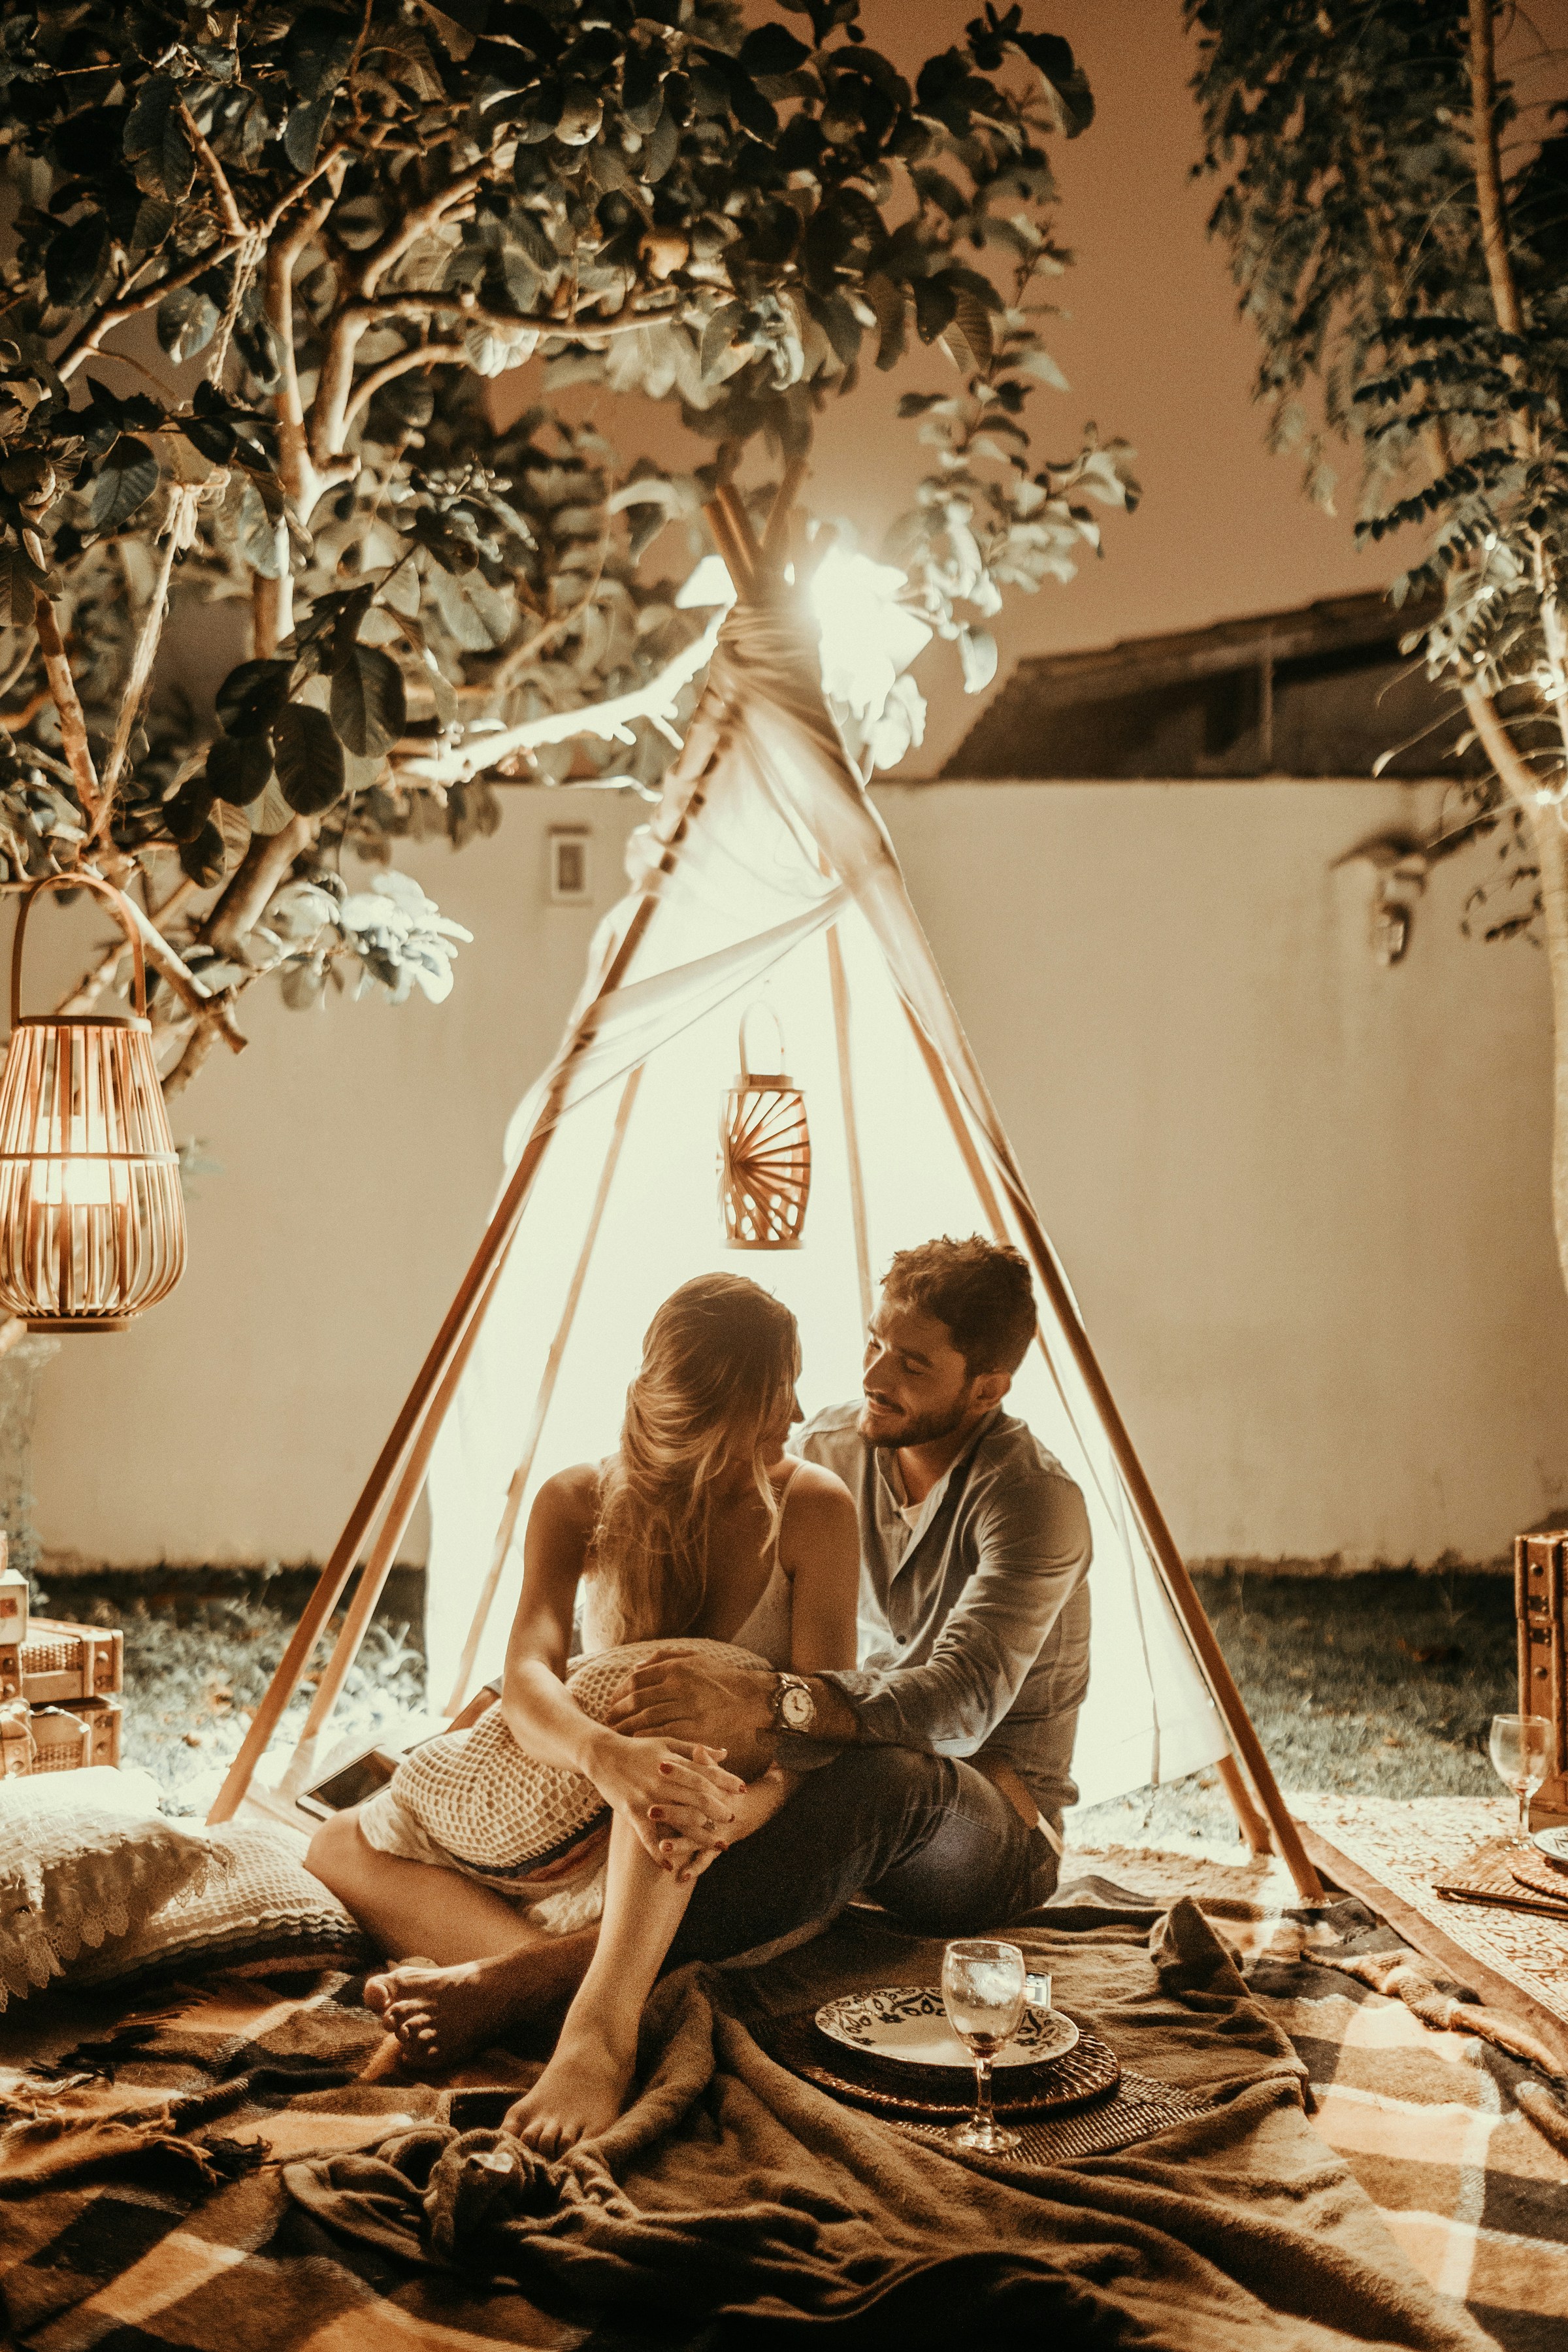 A couple sitting inside a tepee hut with lights | Source: Unsplash